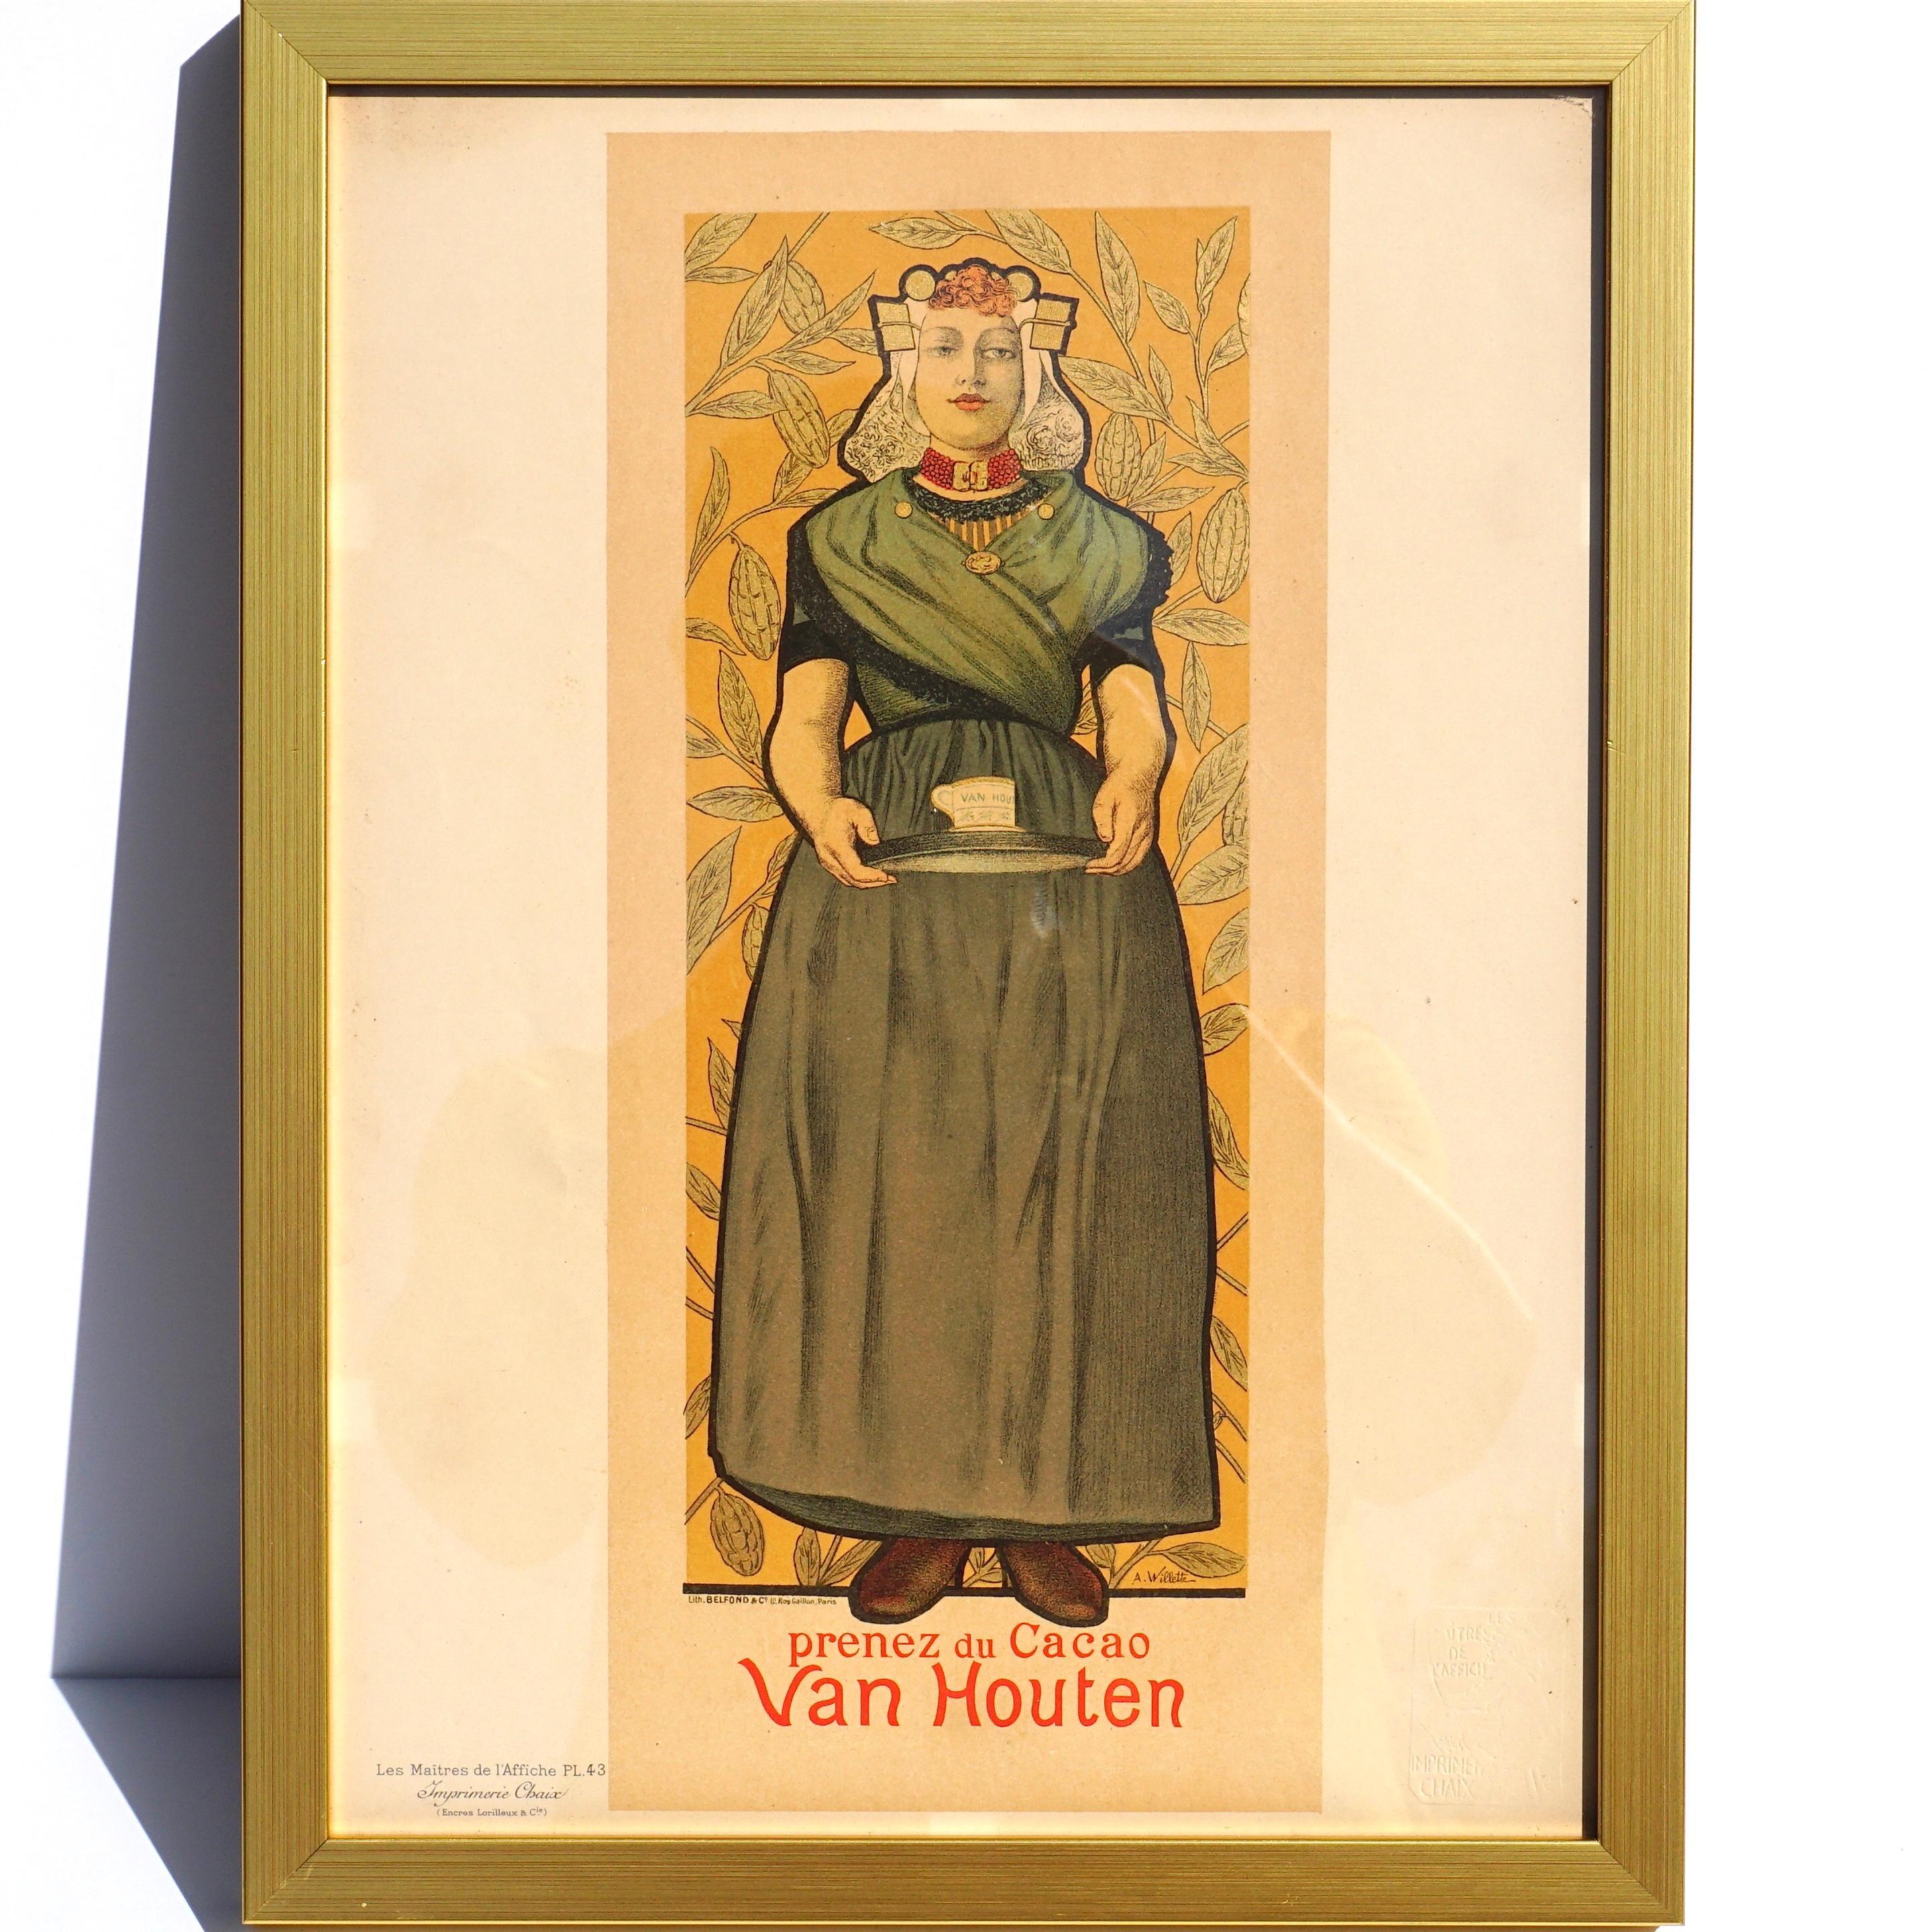 Adolph Willette “Cacao Van Houten” Original 1896 Poster Chaix - Art Nouveau Print by Adolphe Willette